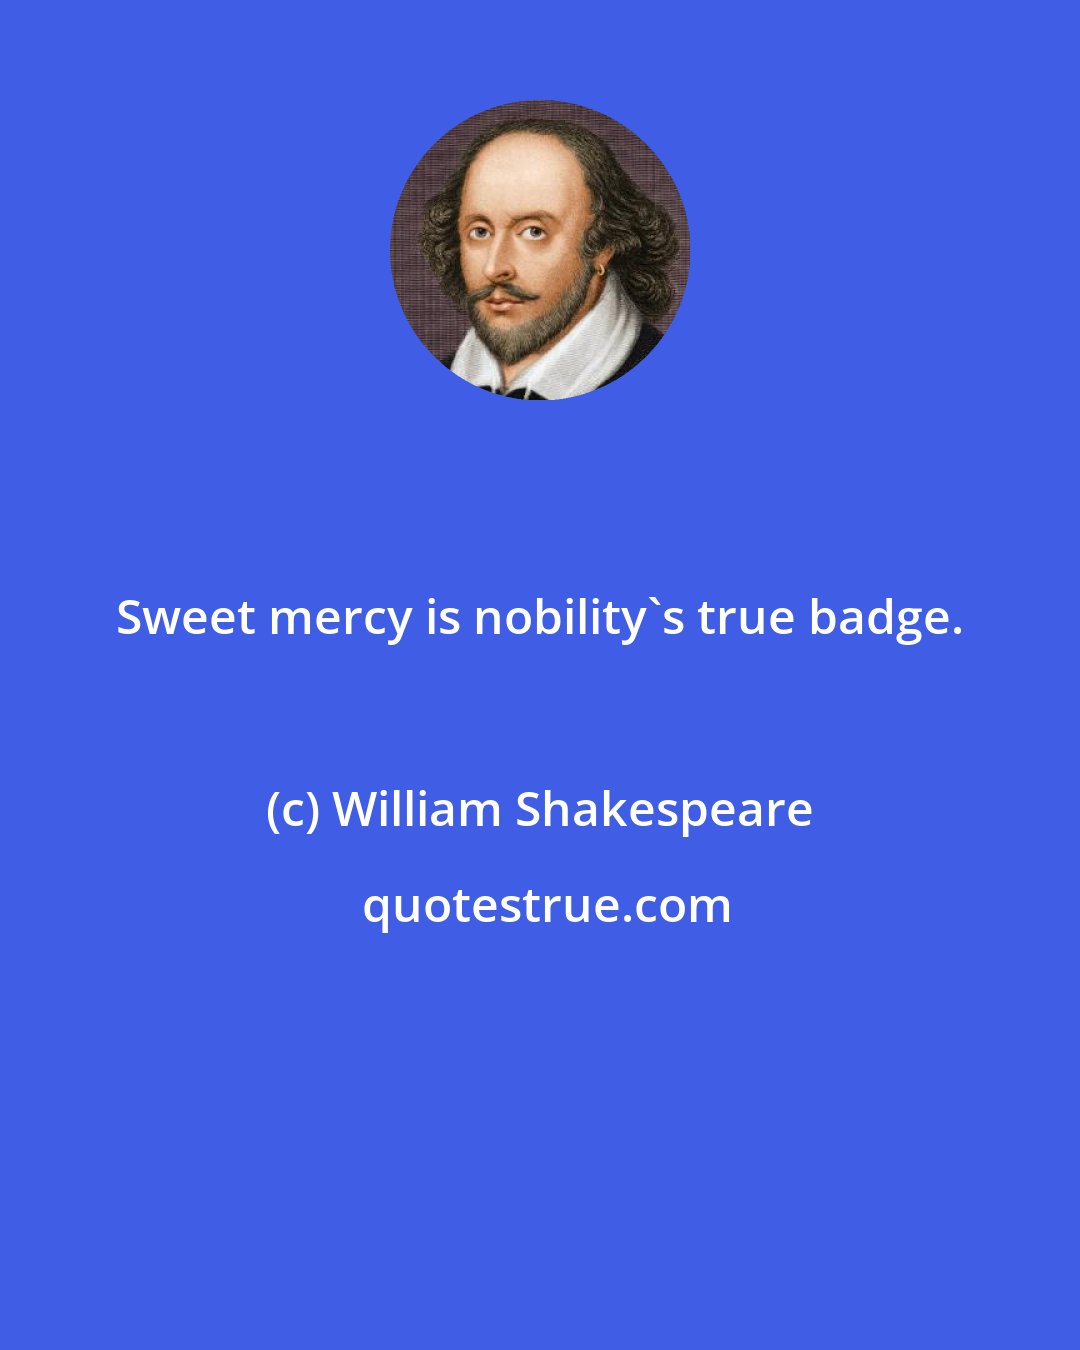 William Shakespeare: Sweet mercy is nobility's true badge.